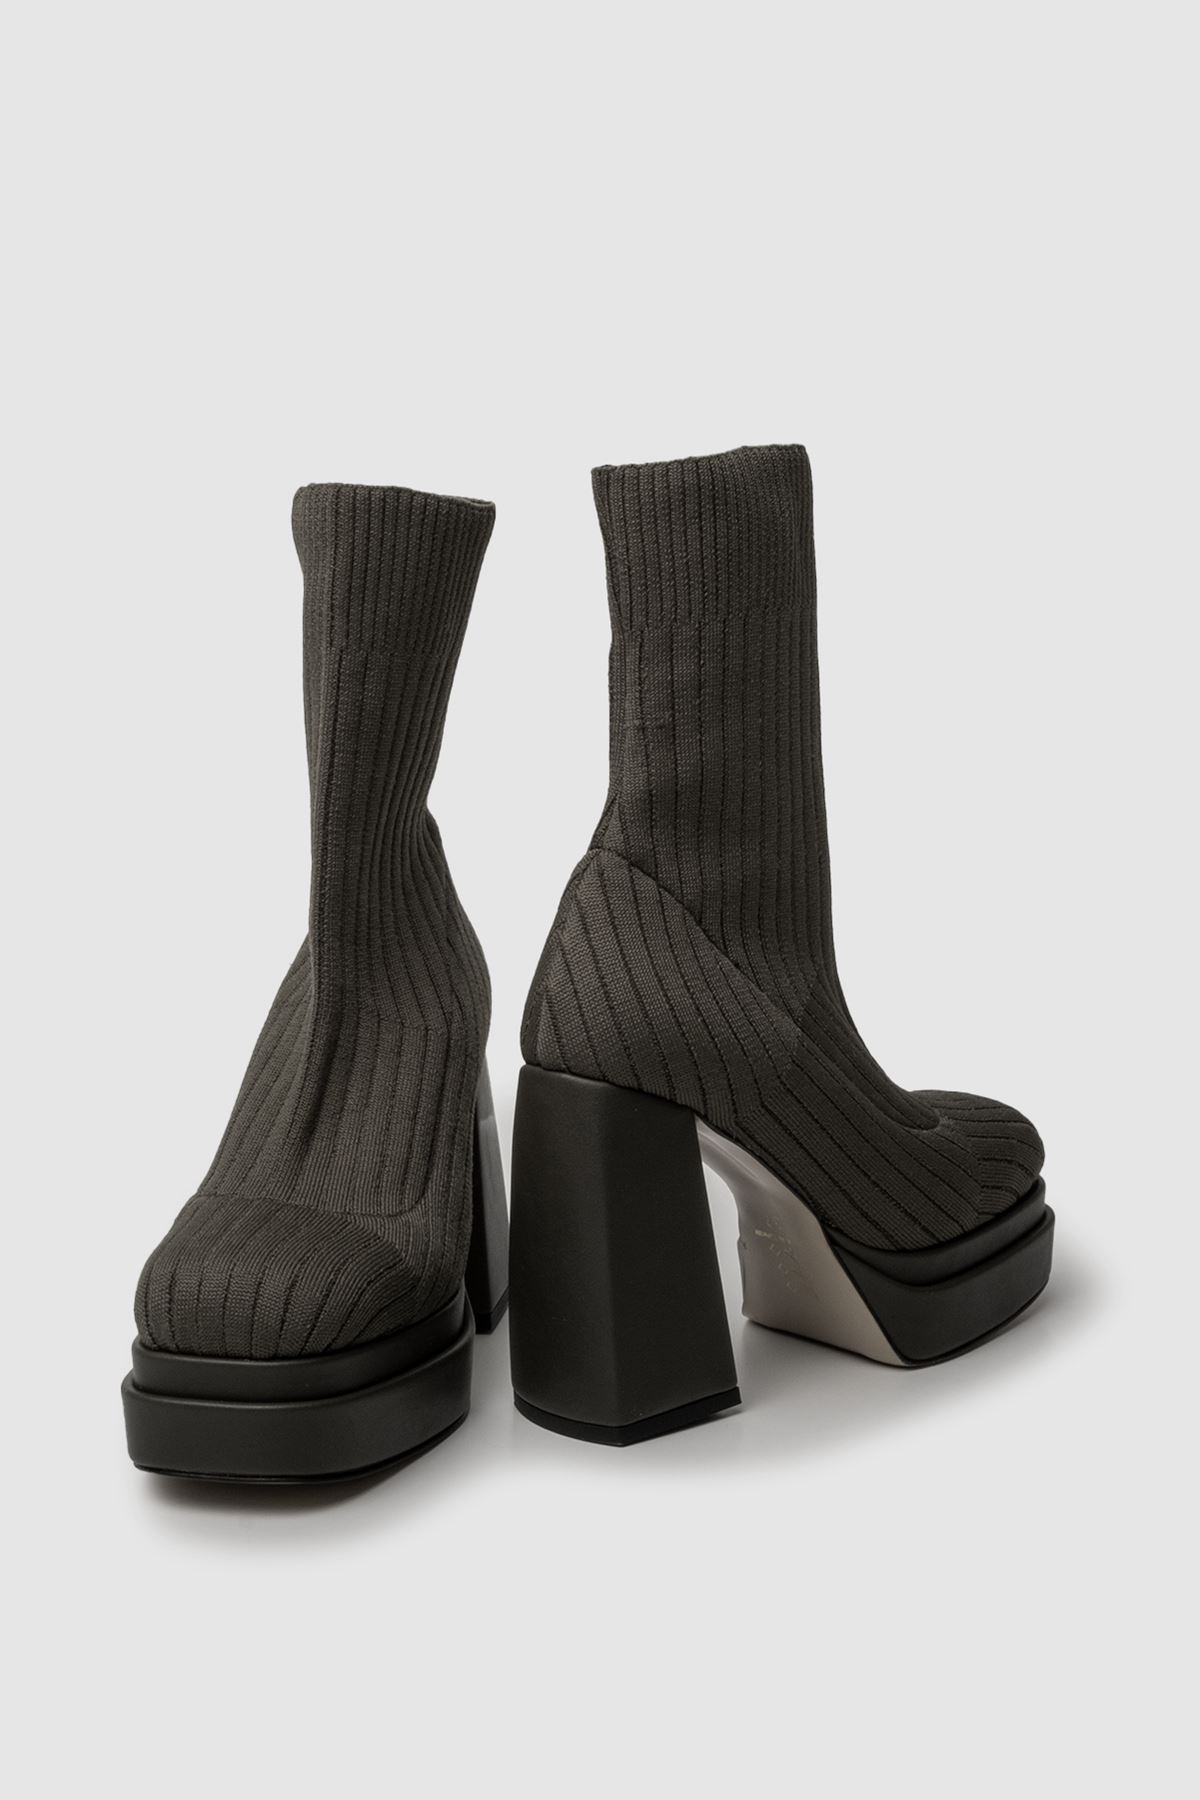 Camilla Platform Topuk Triko Kadın Bot & Boatie Ayakkabı Gate Shoes-Siyah